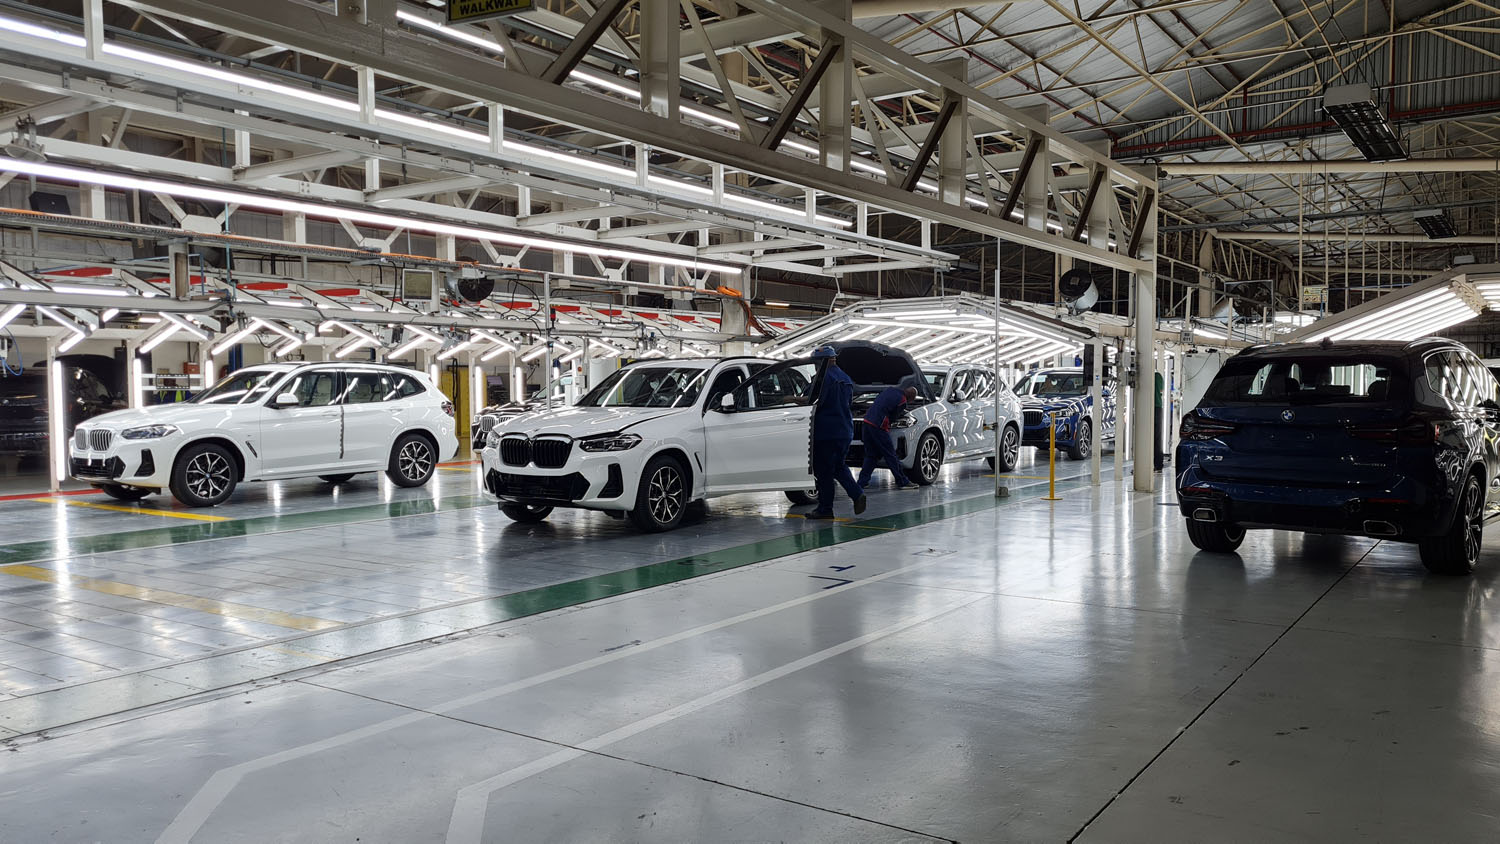 afcfta, agoa, naamsa, “millions of jobs” across african car industry at risk – south africa the deciding factor